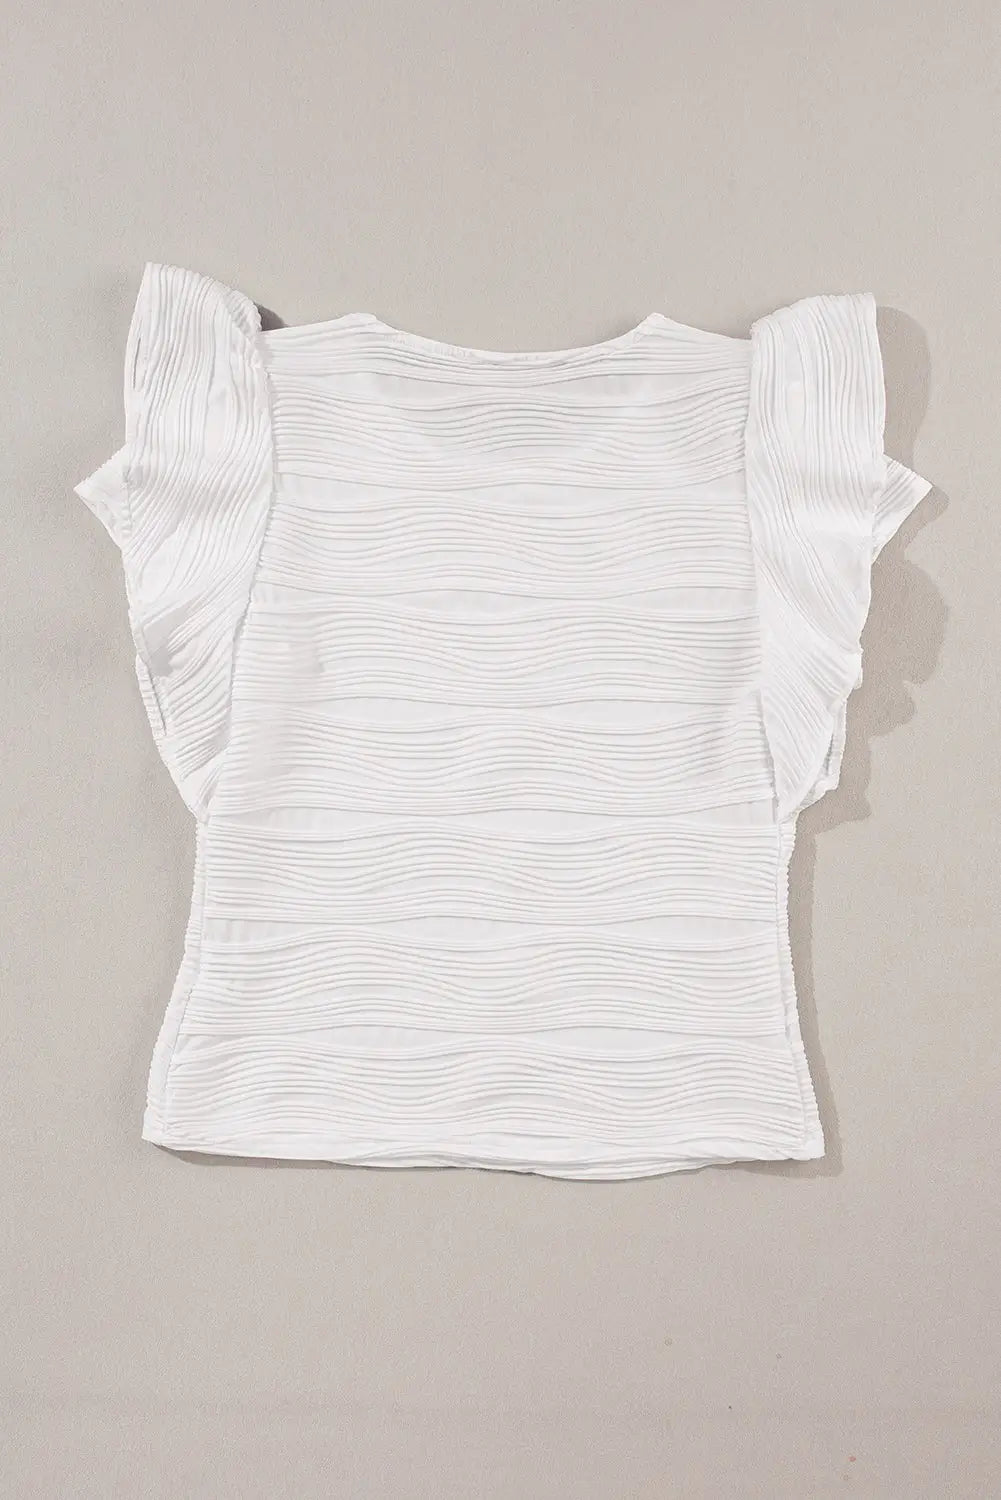 White wavy textured ruffle sleeve top - tops